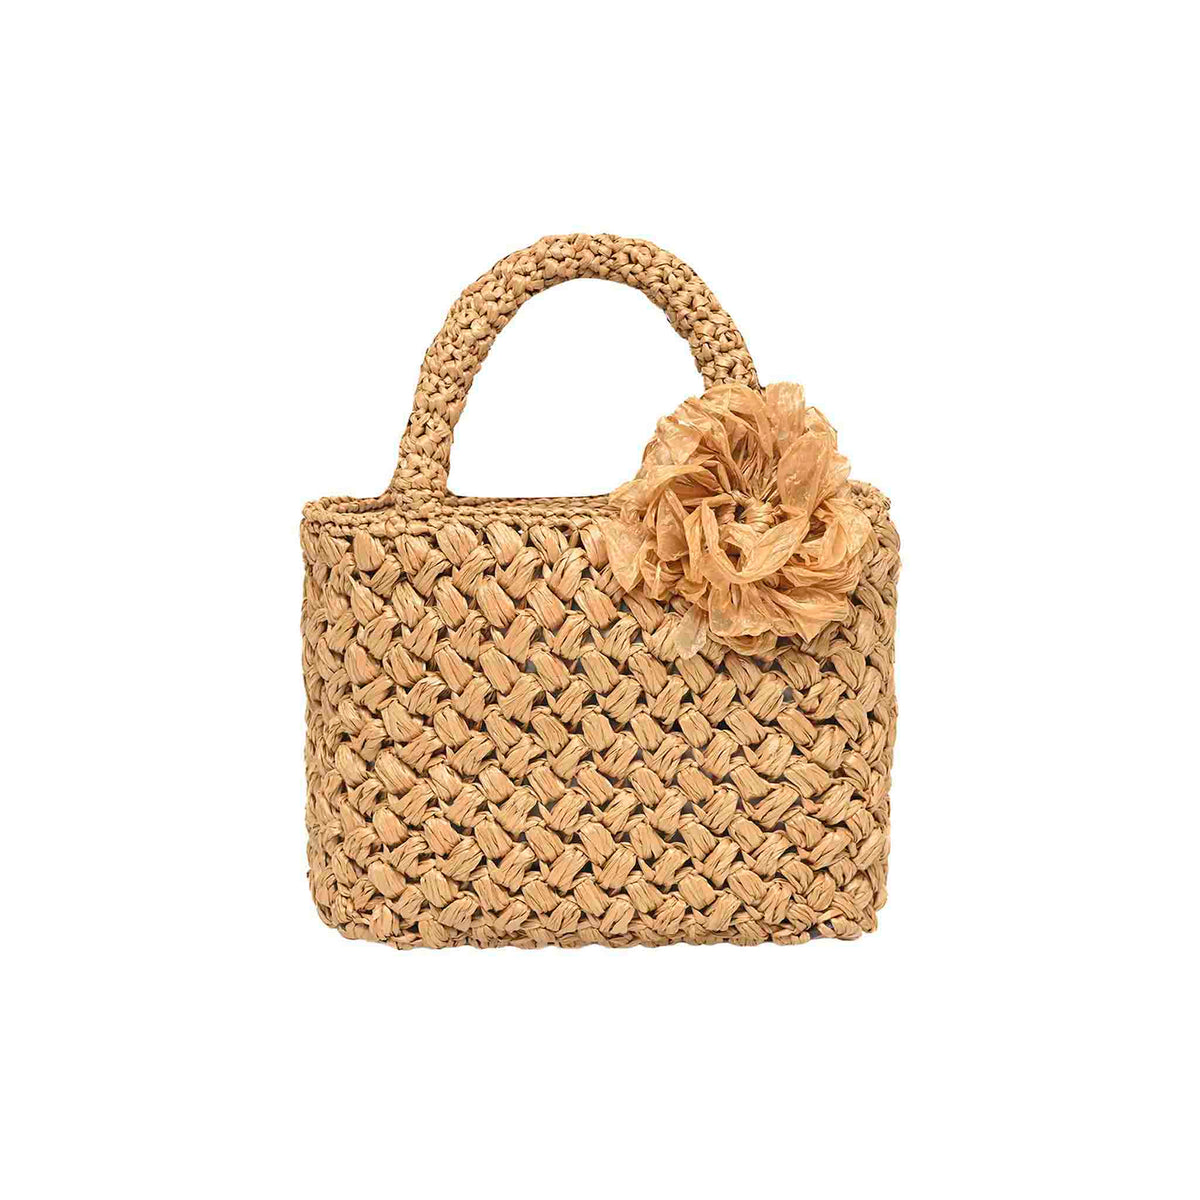 Raffia small tote bag gold in color from mini Carmen Sol made in Italy.